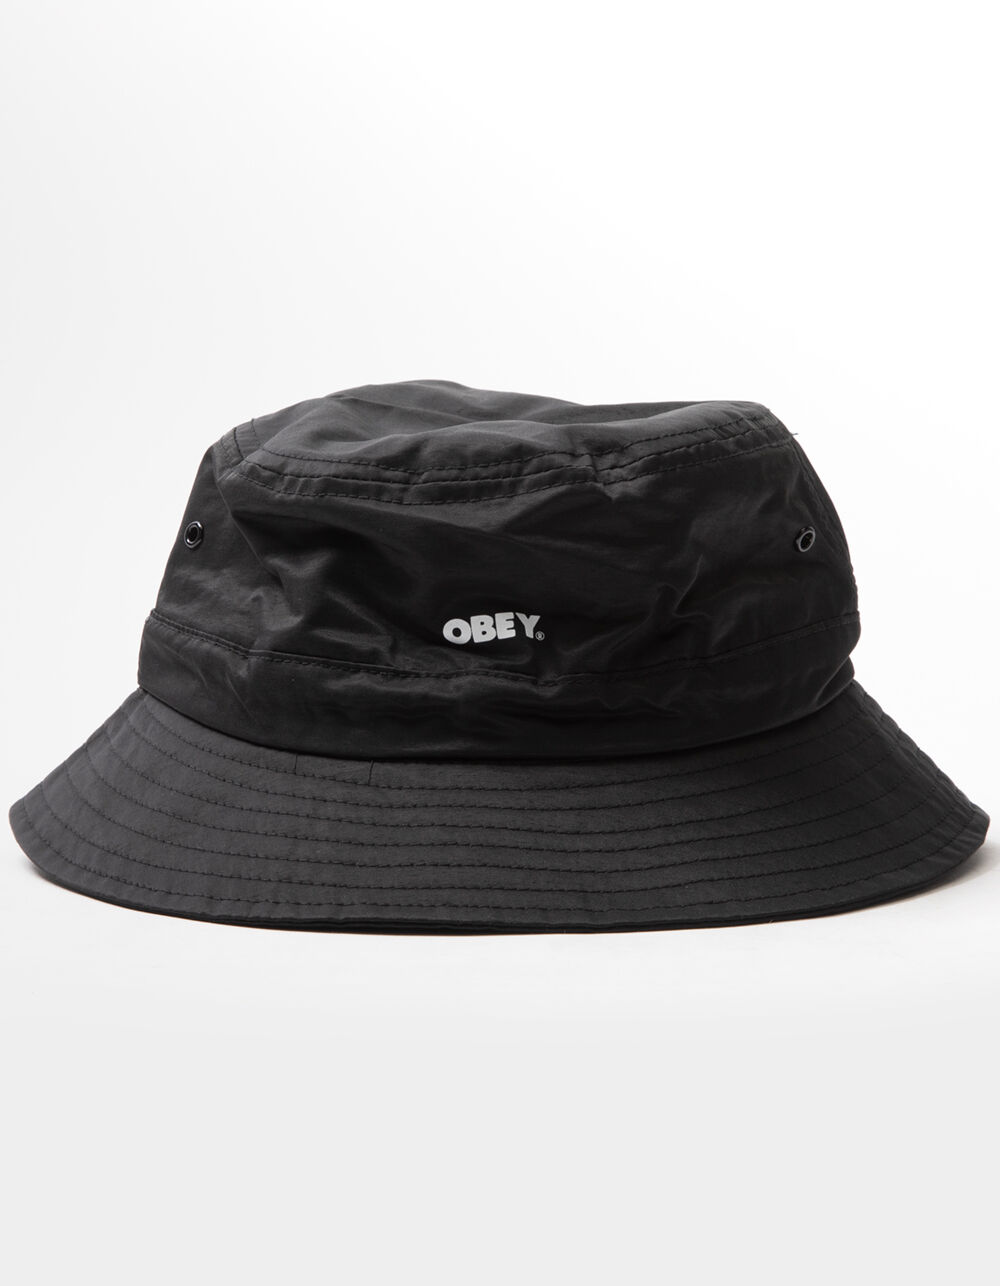 Obey Hats | Tillys